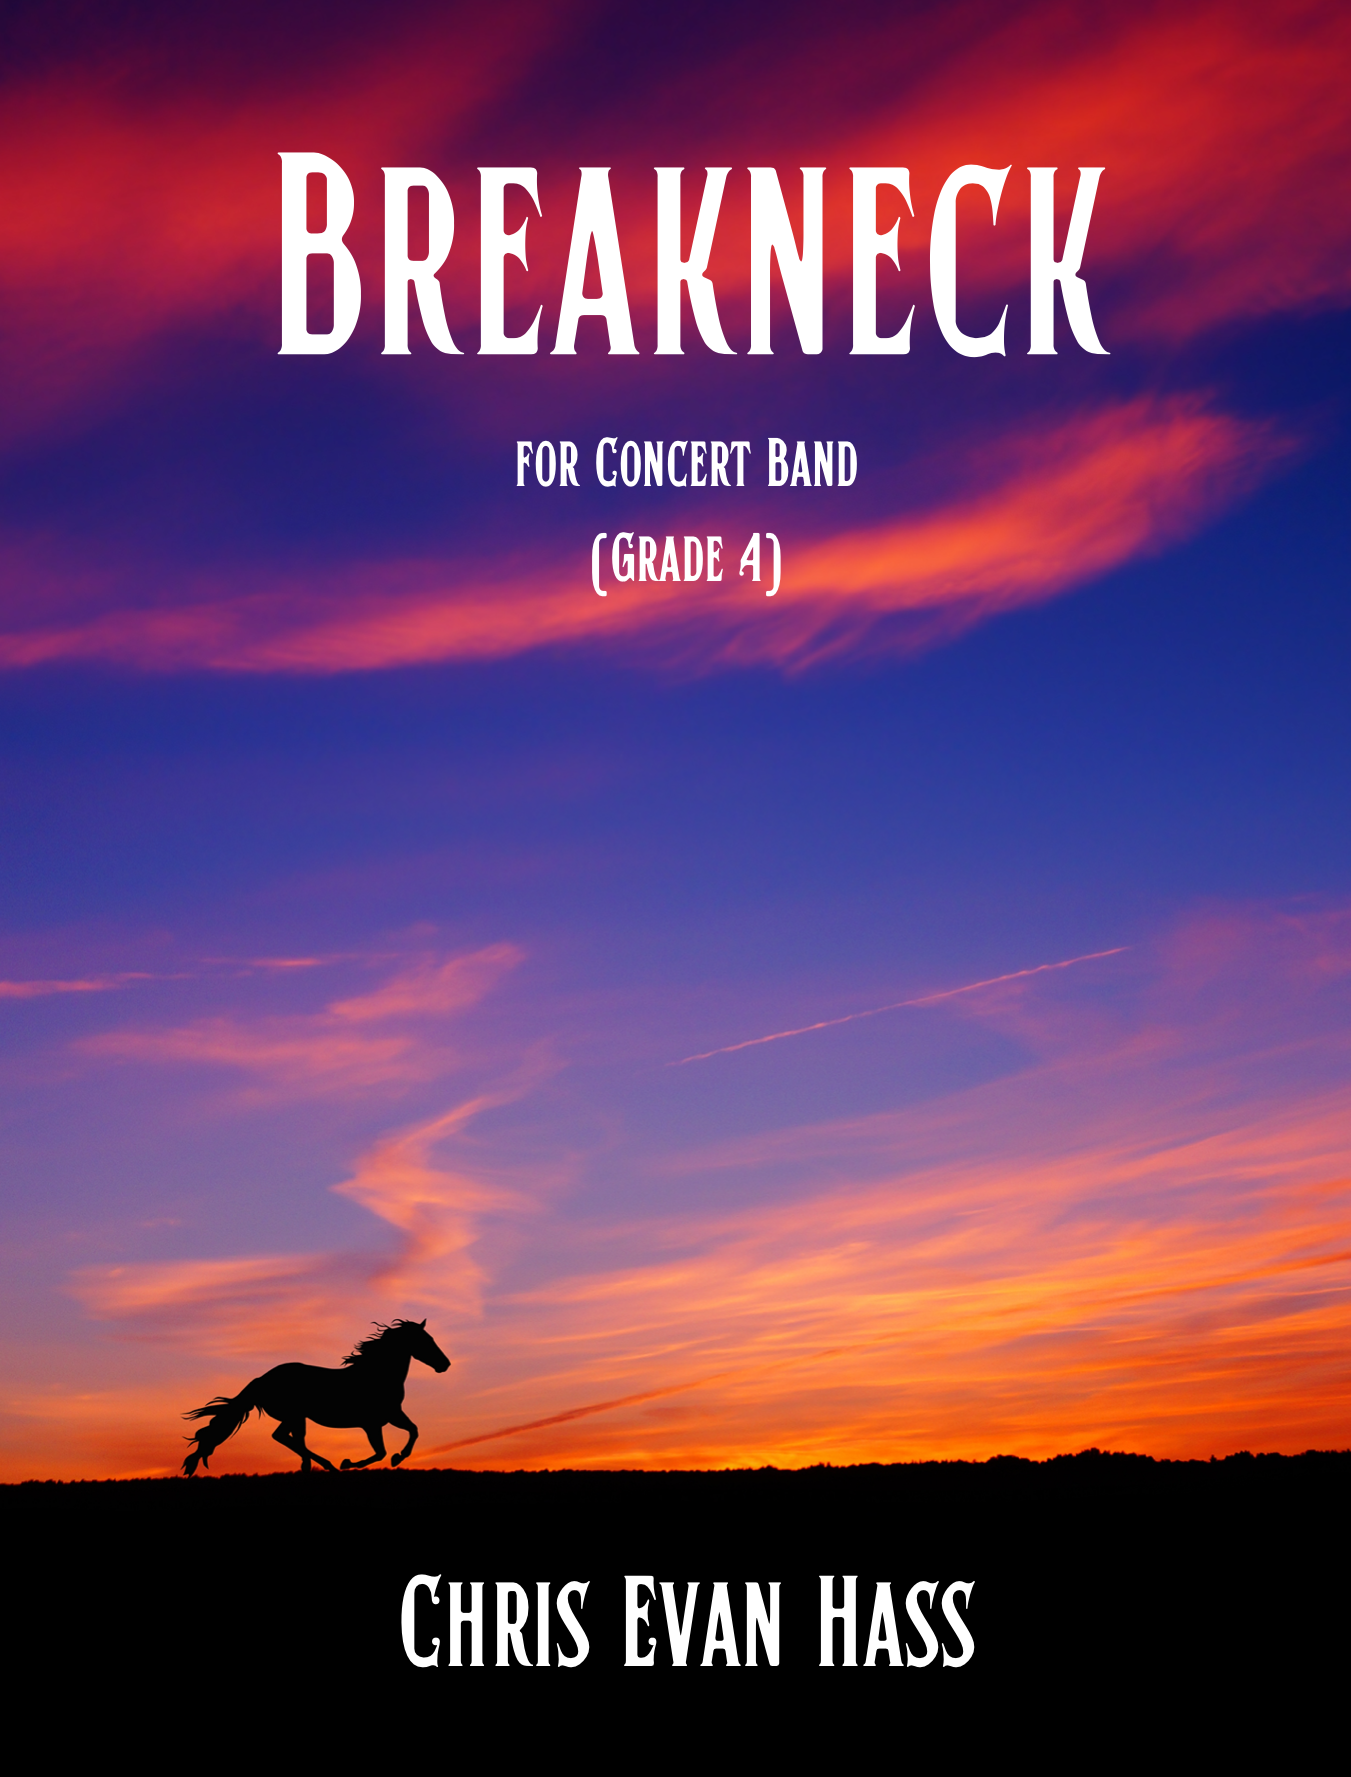 Breakneck by Chris Evan Hass